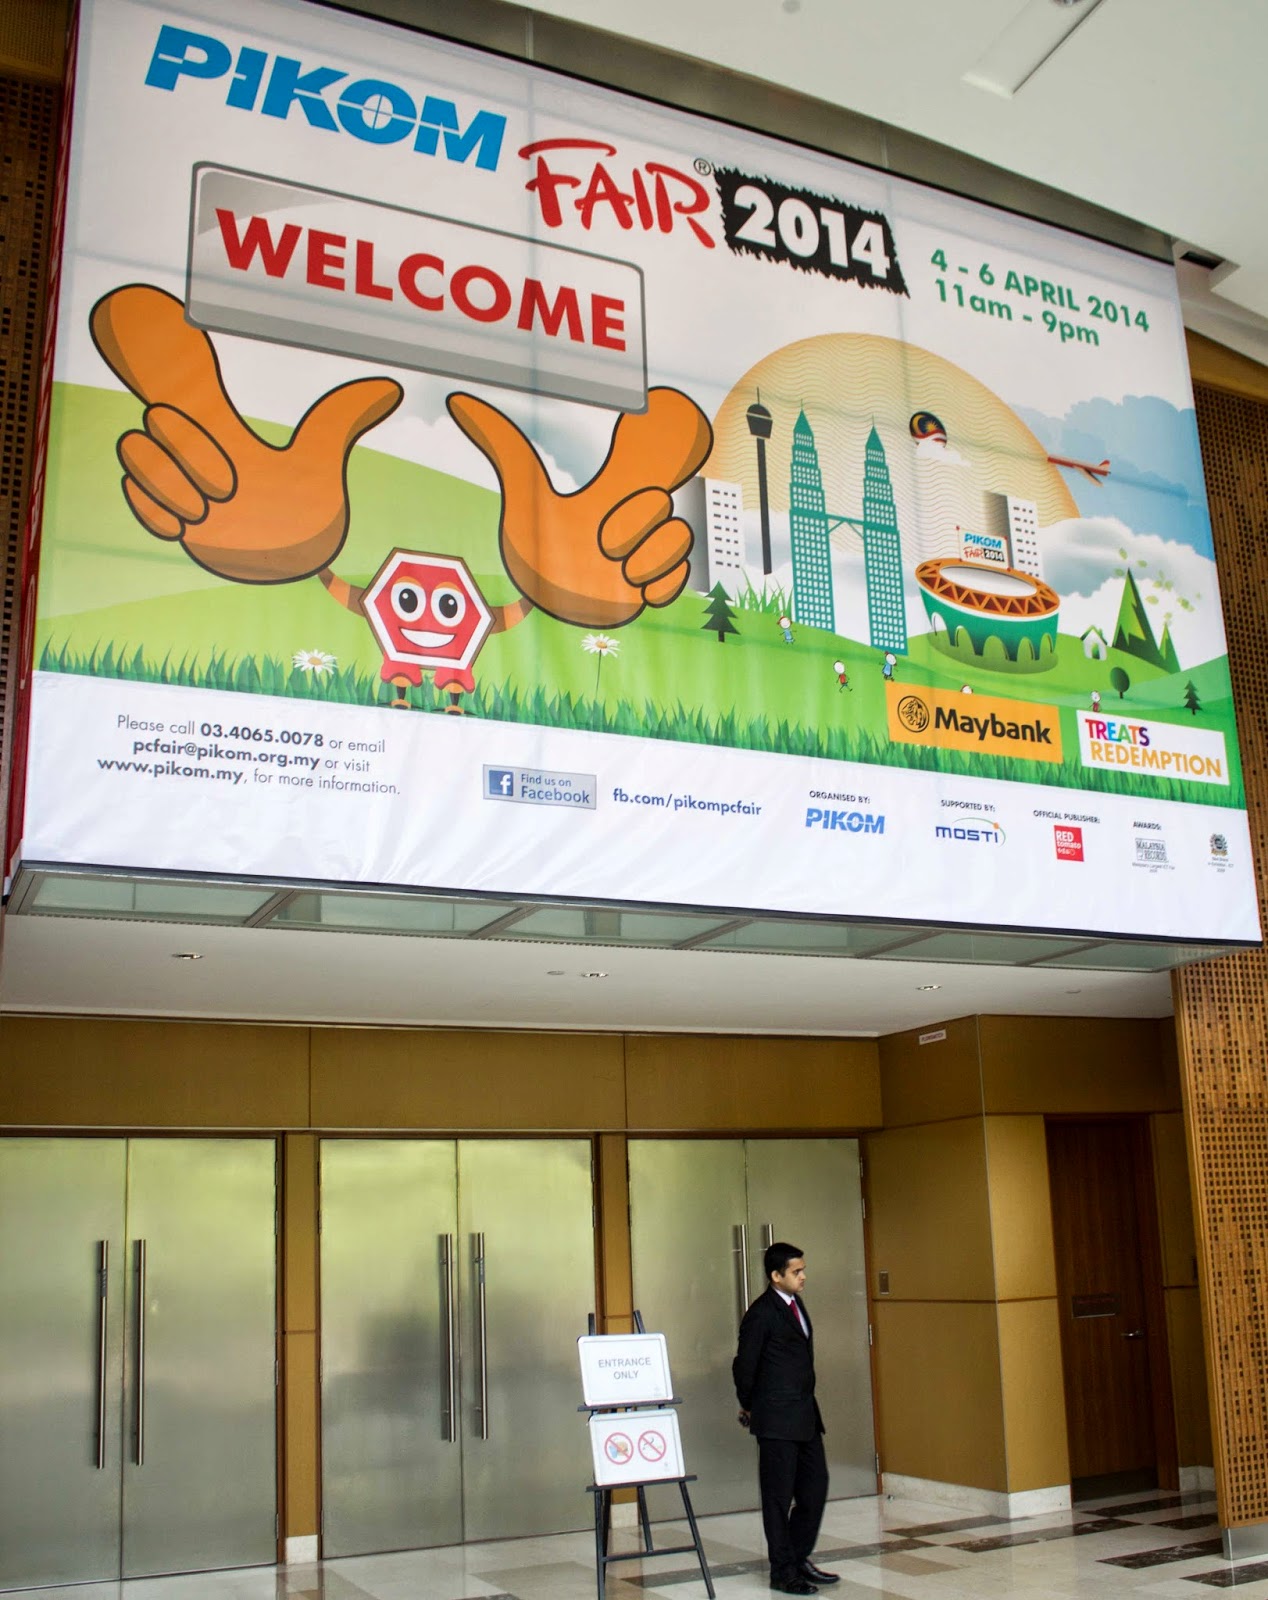 Coverage of PIKOM PC Fair 2014 @ Kuala Lumpur Convention Center 2